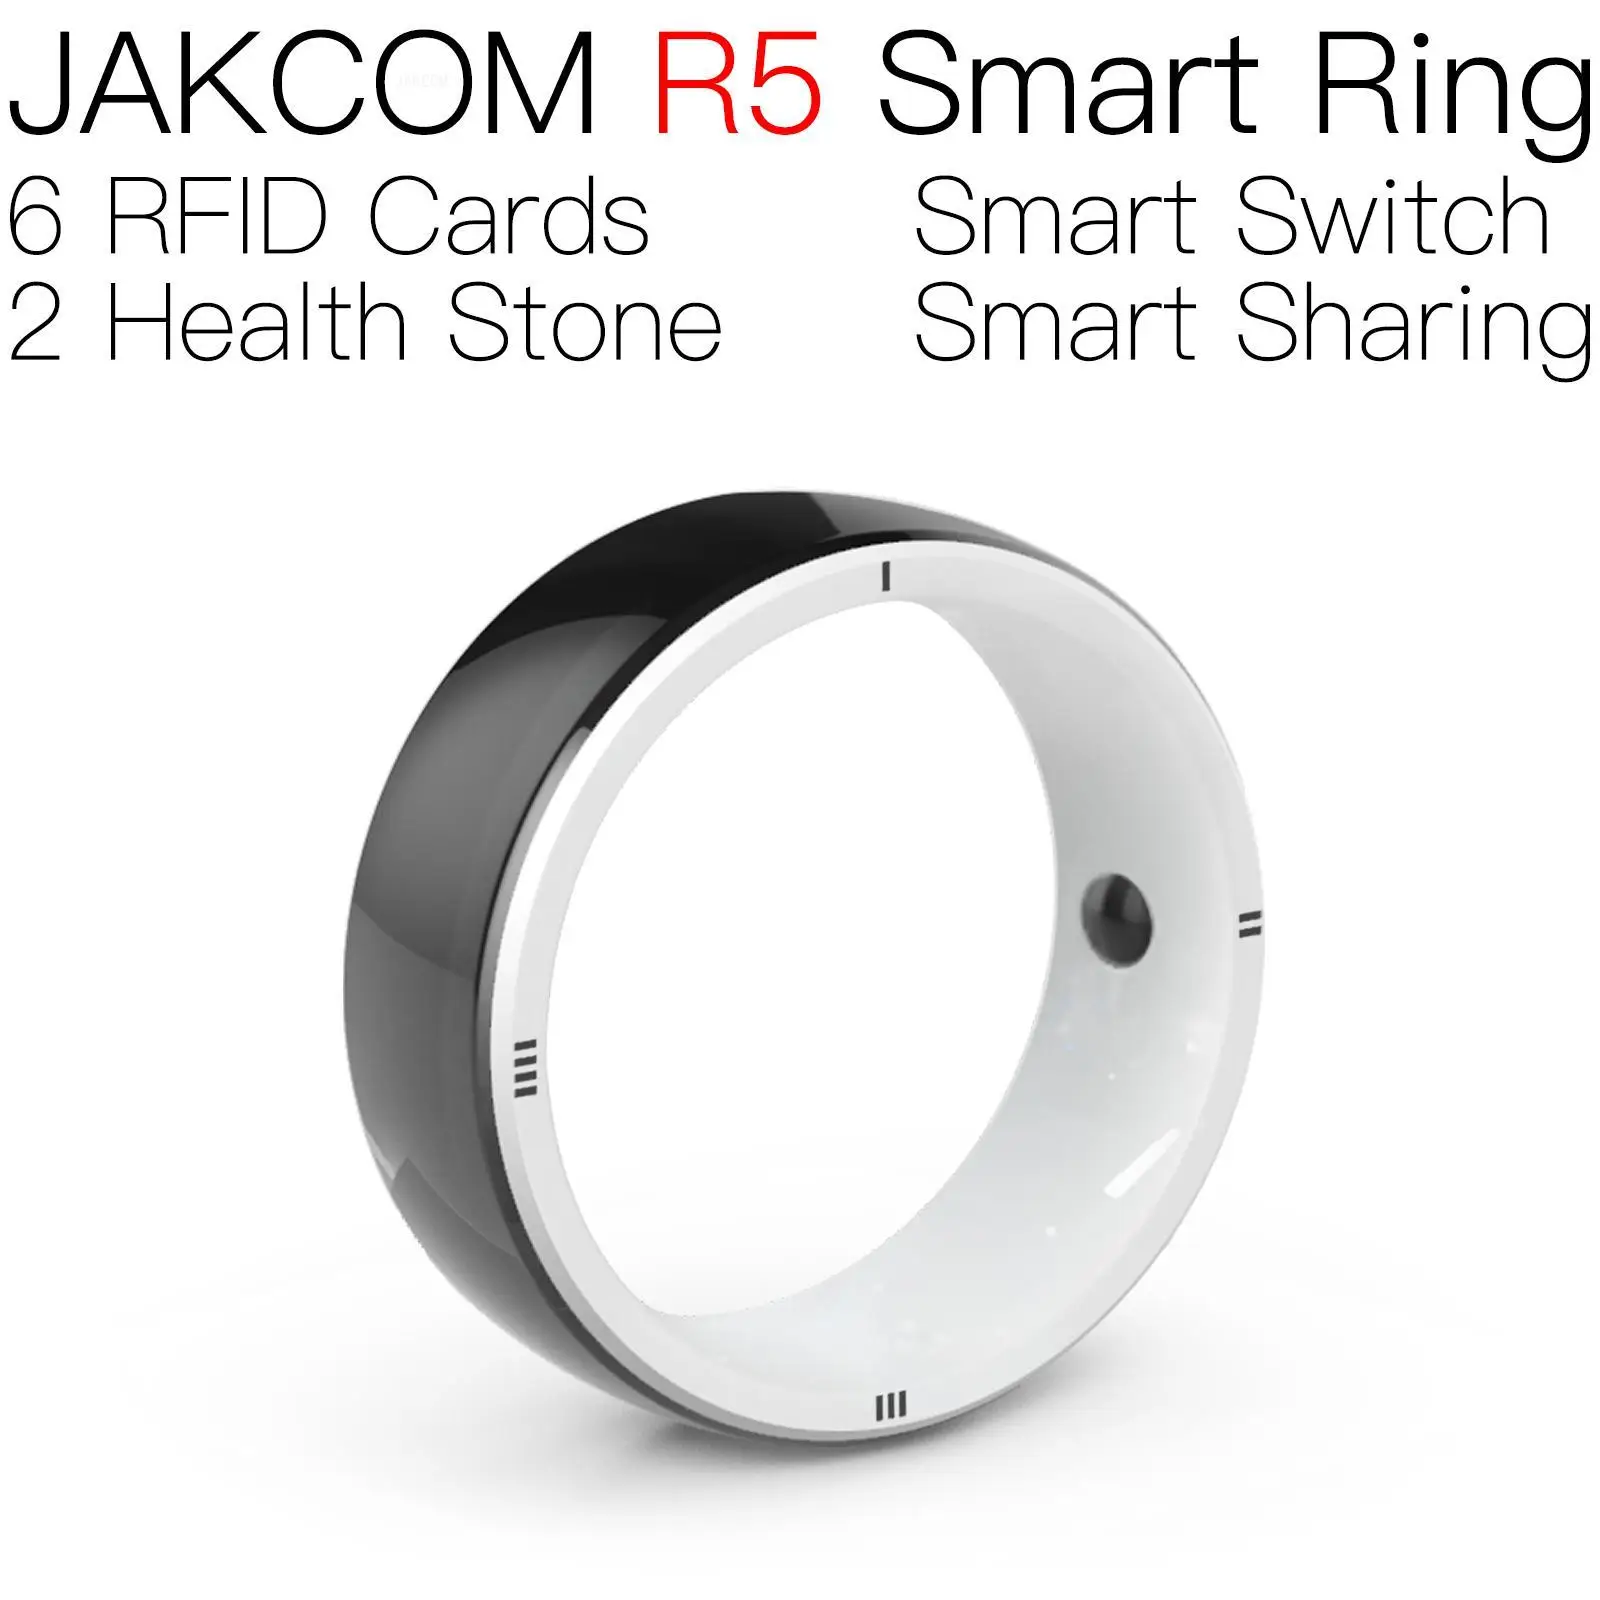 

JAKCOM R5 Smart Ring Super value than rfid hit card 13 56 mhz t5577 inkjet chipreader dog tv animal tracks tag bio energy